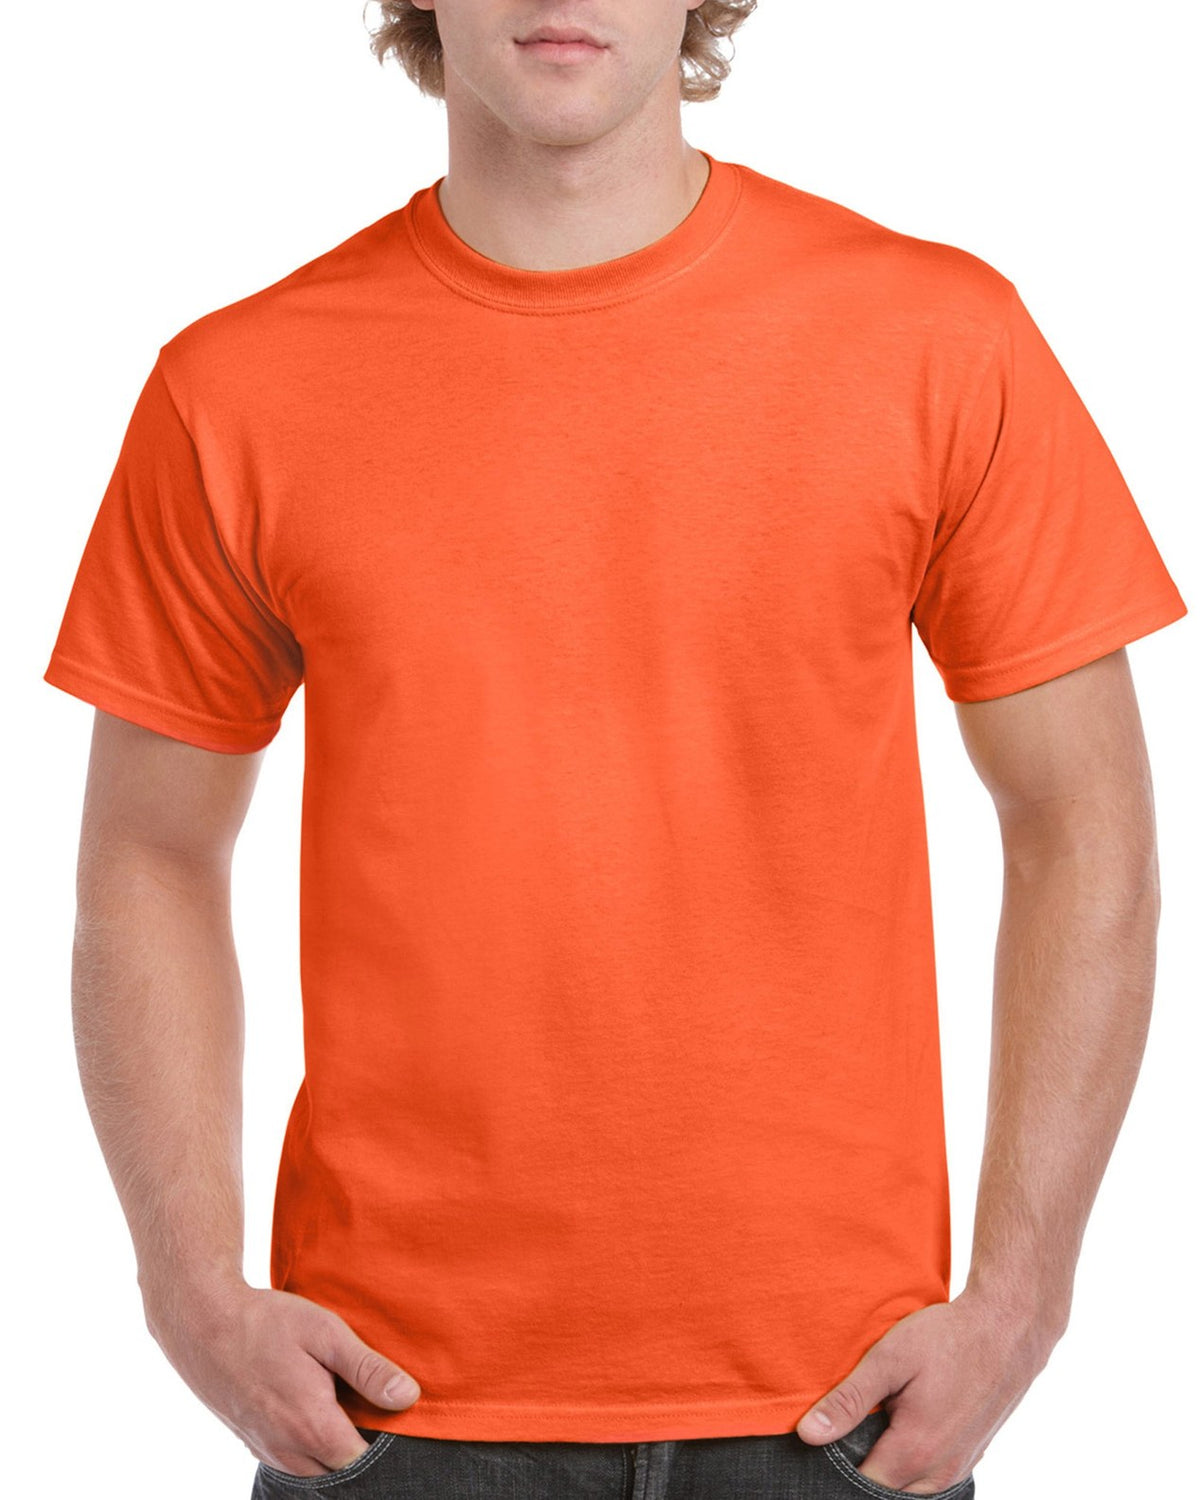 (5 Pack) GILDAN Short Sleeve Mix Colors Plain T Shirts S M L XL 2XL 3XL 4XL  5XL